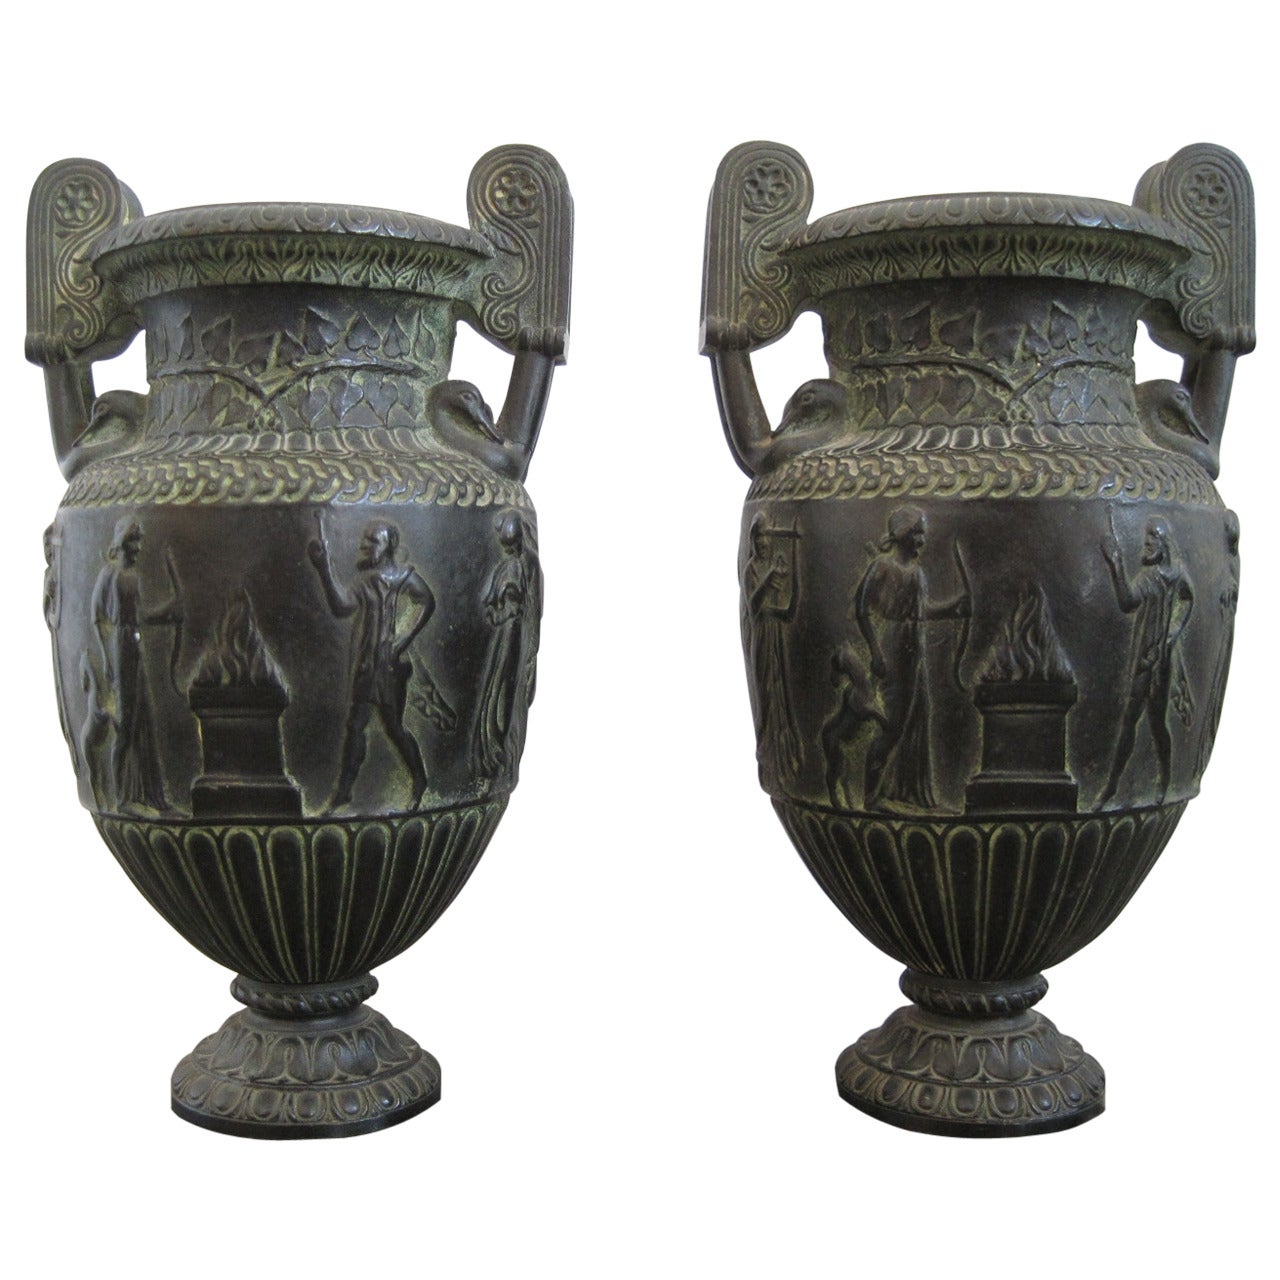 19th Century Bronze Urns, Neoclassical Revival